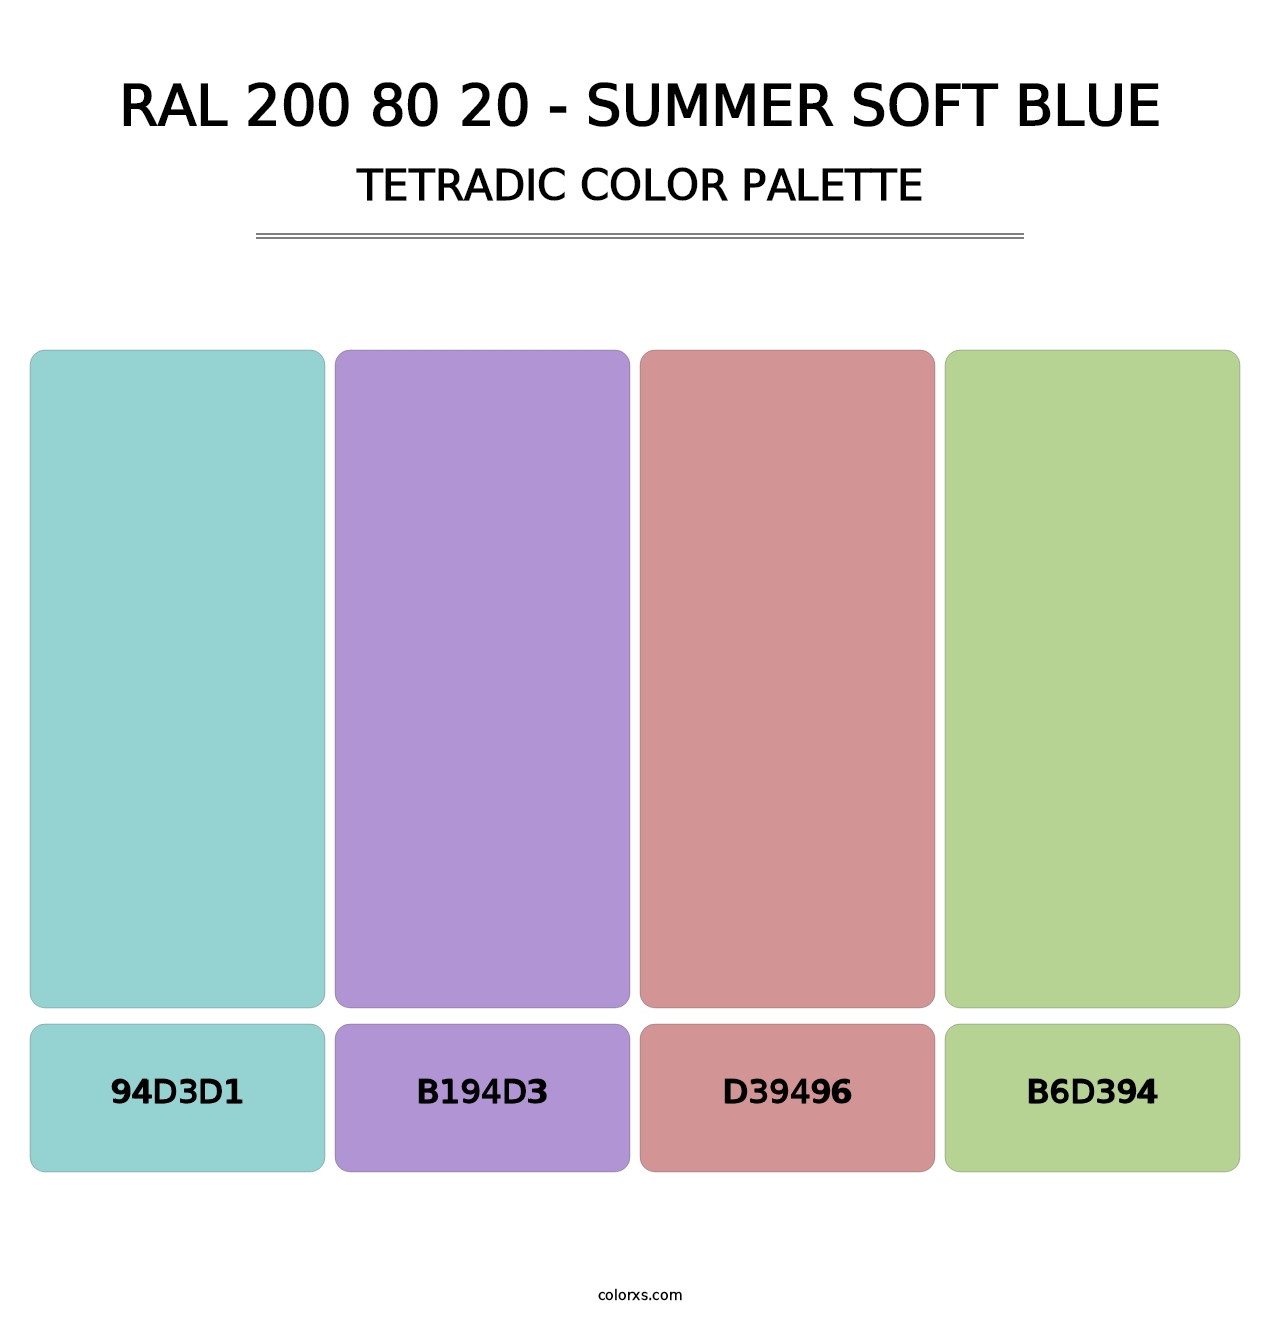 RAL 200 80 20 - Summer Soft Blue - Tetradic Color Palette